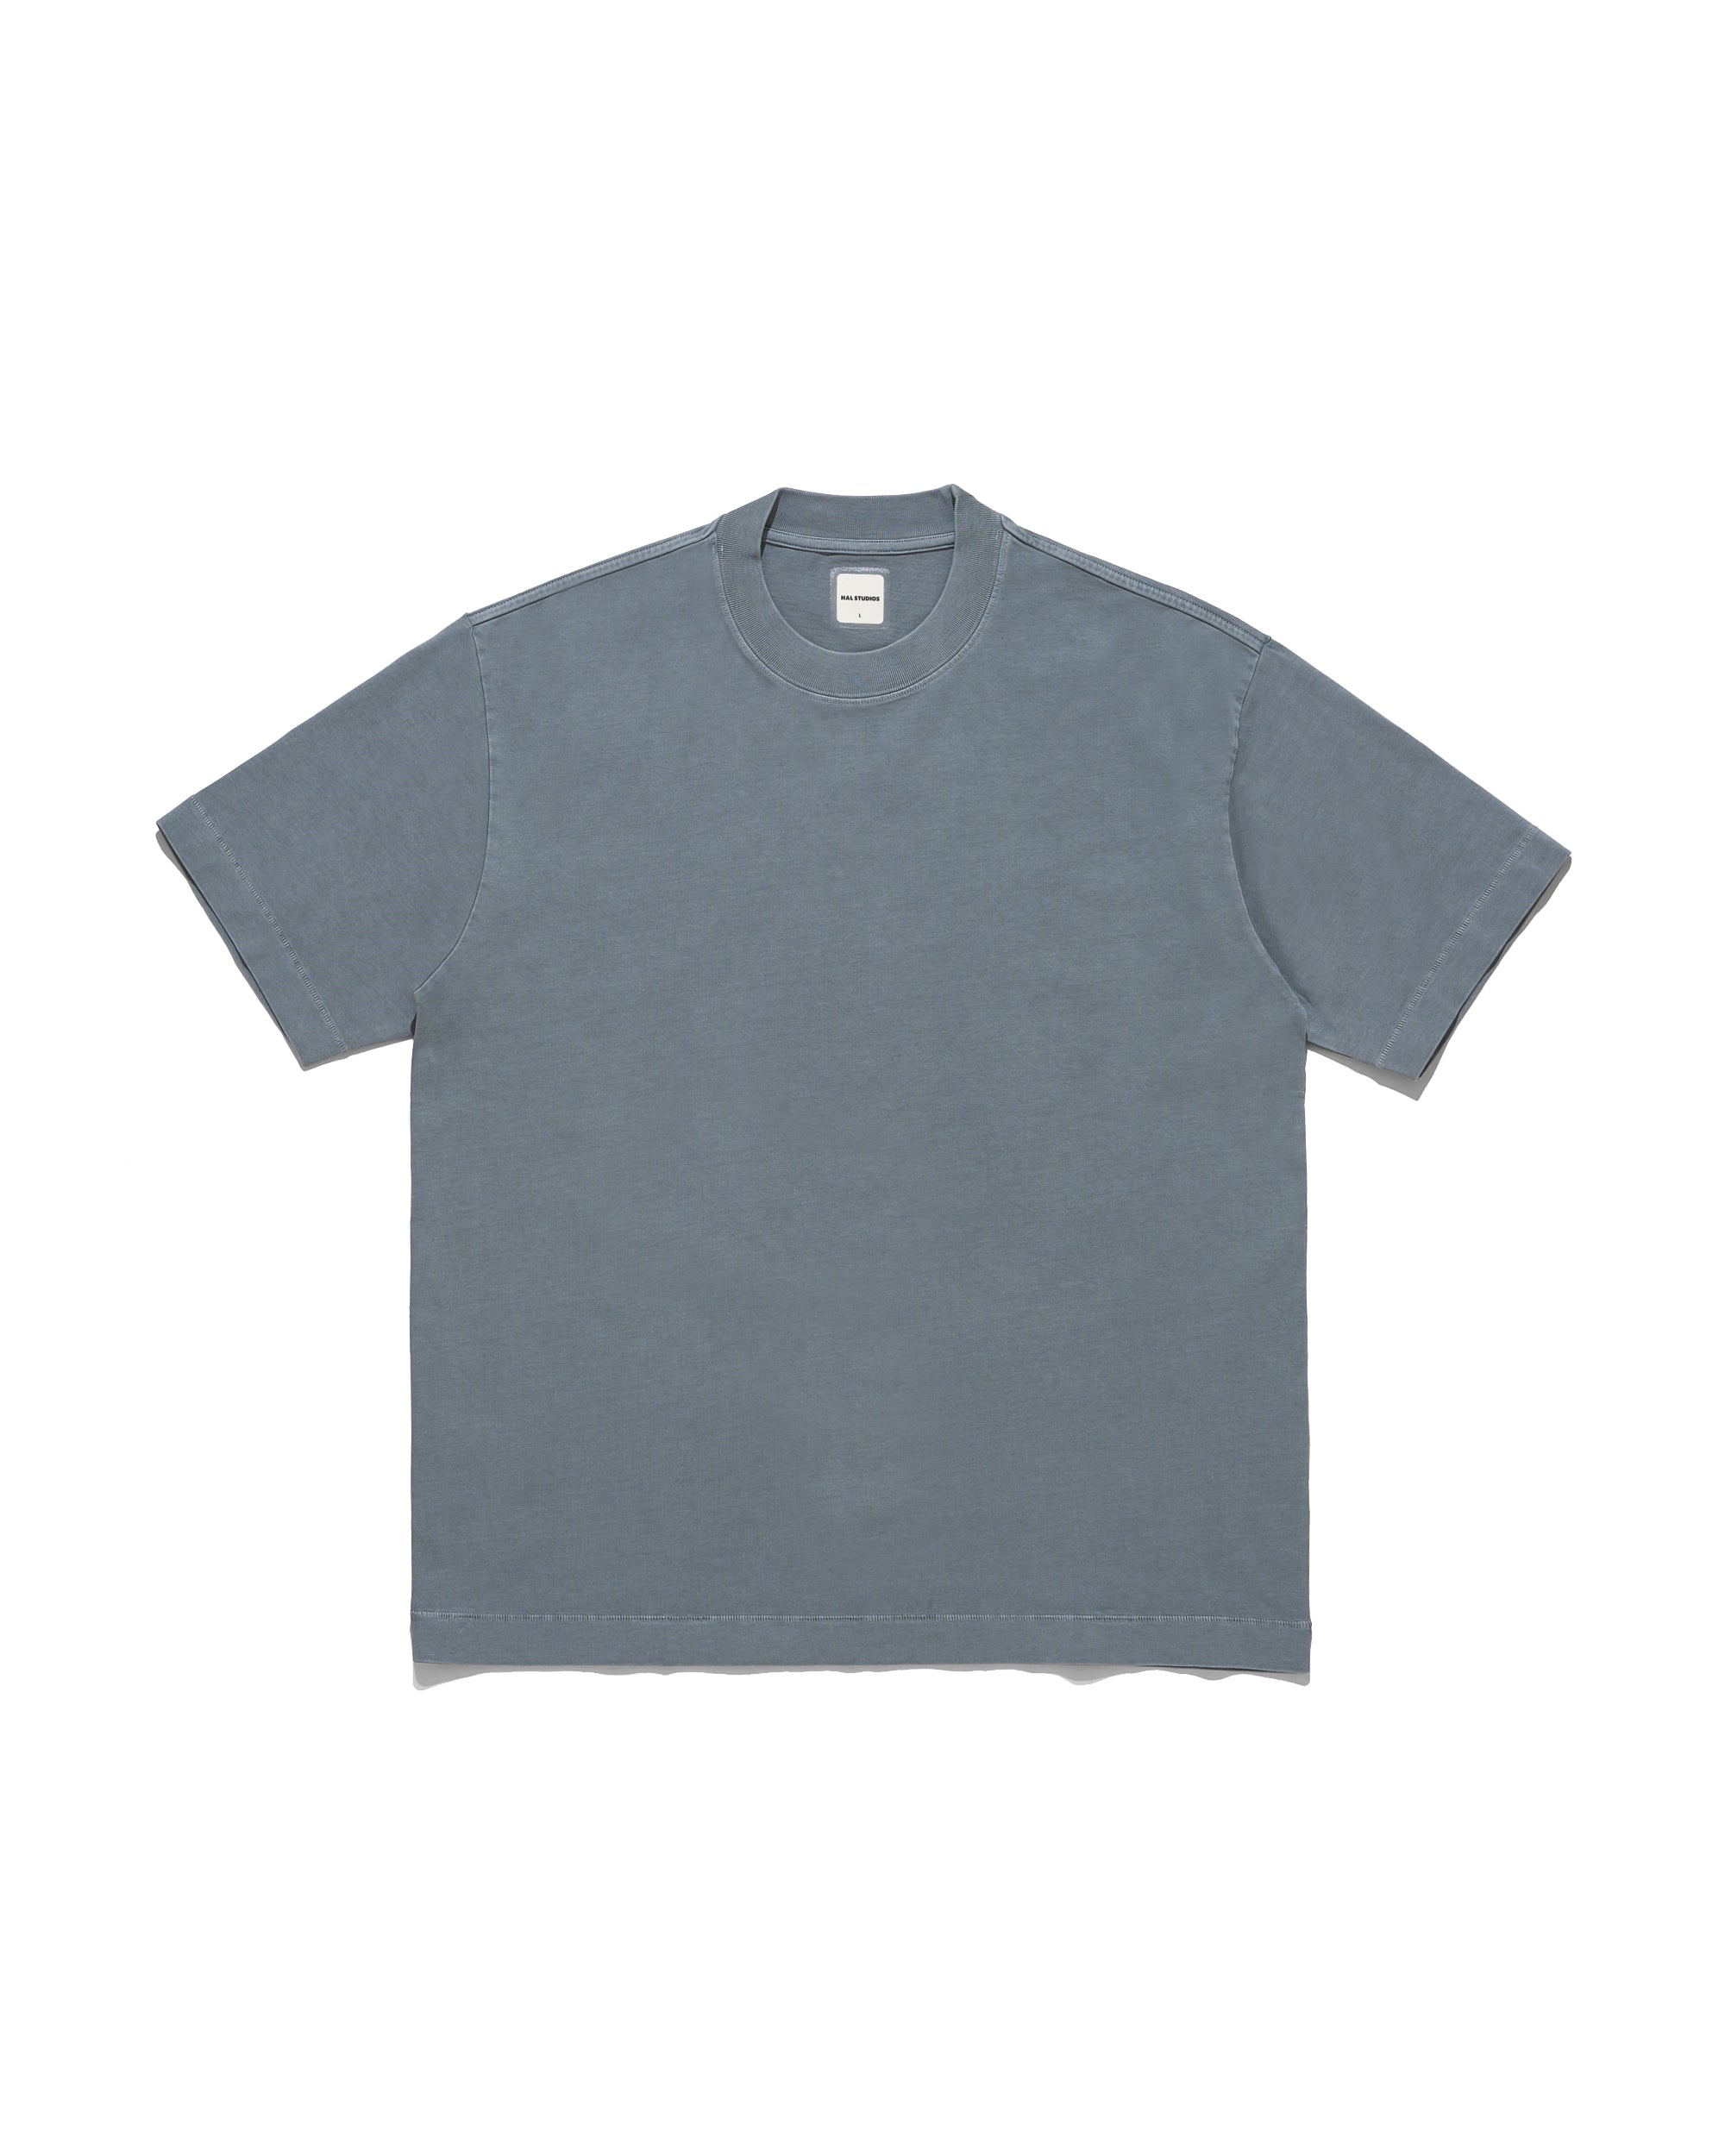 Studio T-Shirt - Sedona Sage